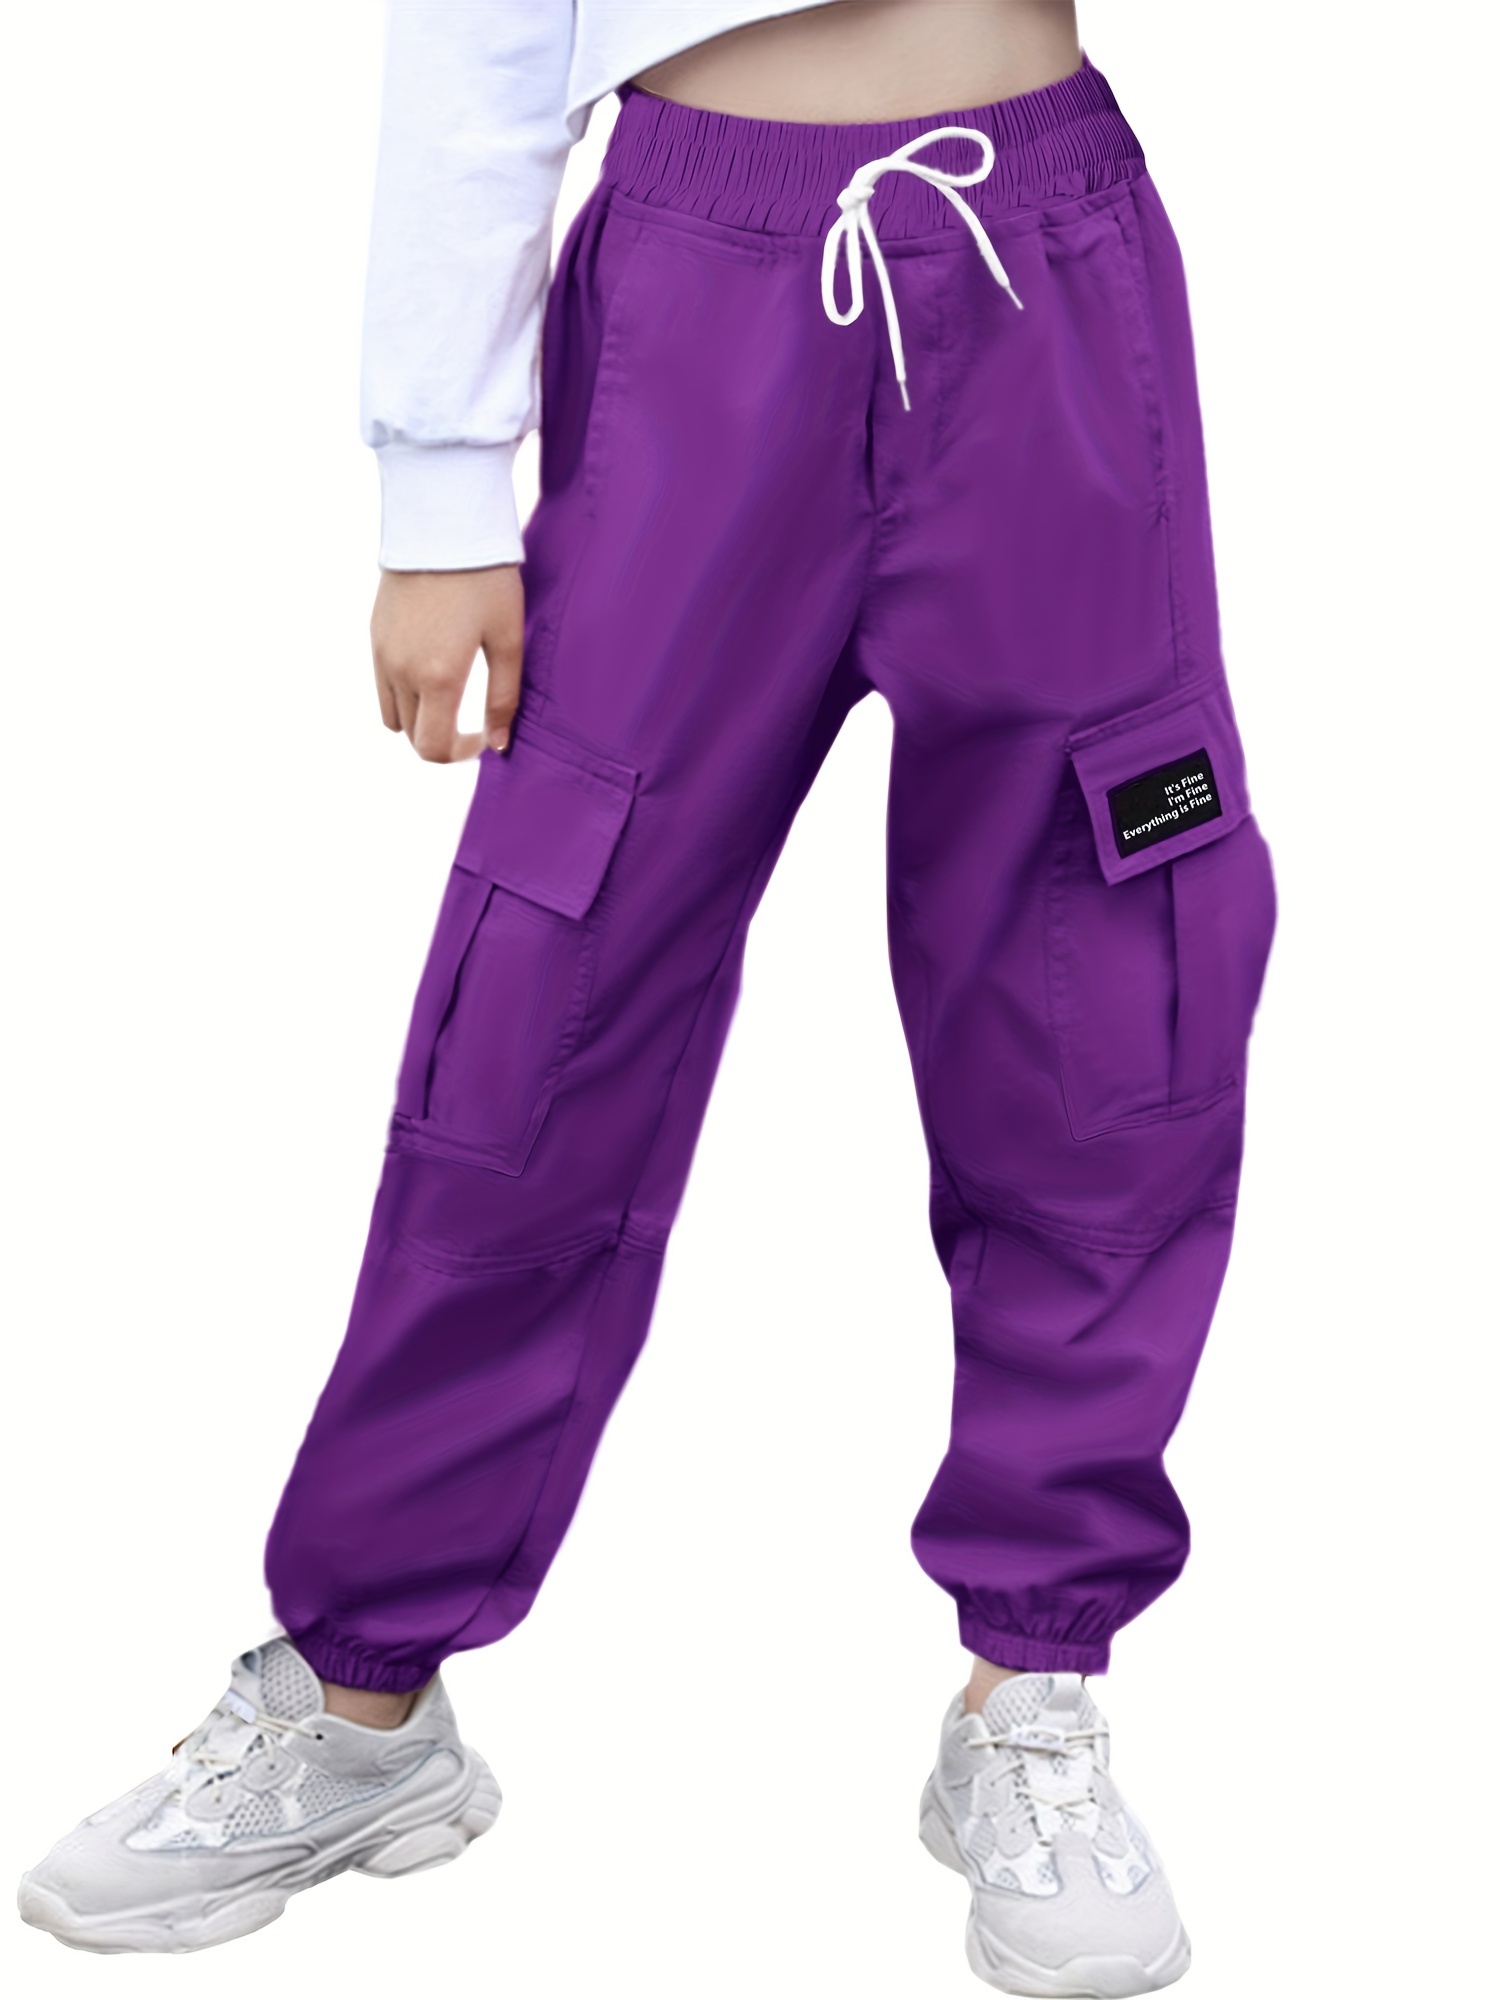 H&M Divided Womens Size 6 Pants Purple Cargo Pockets Elastic Waist